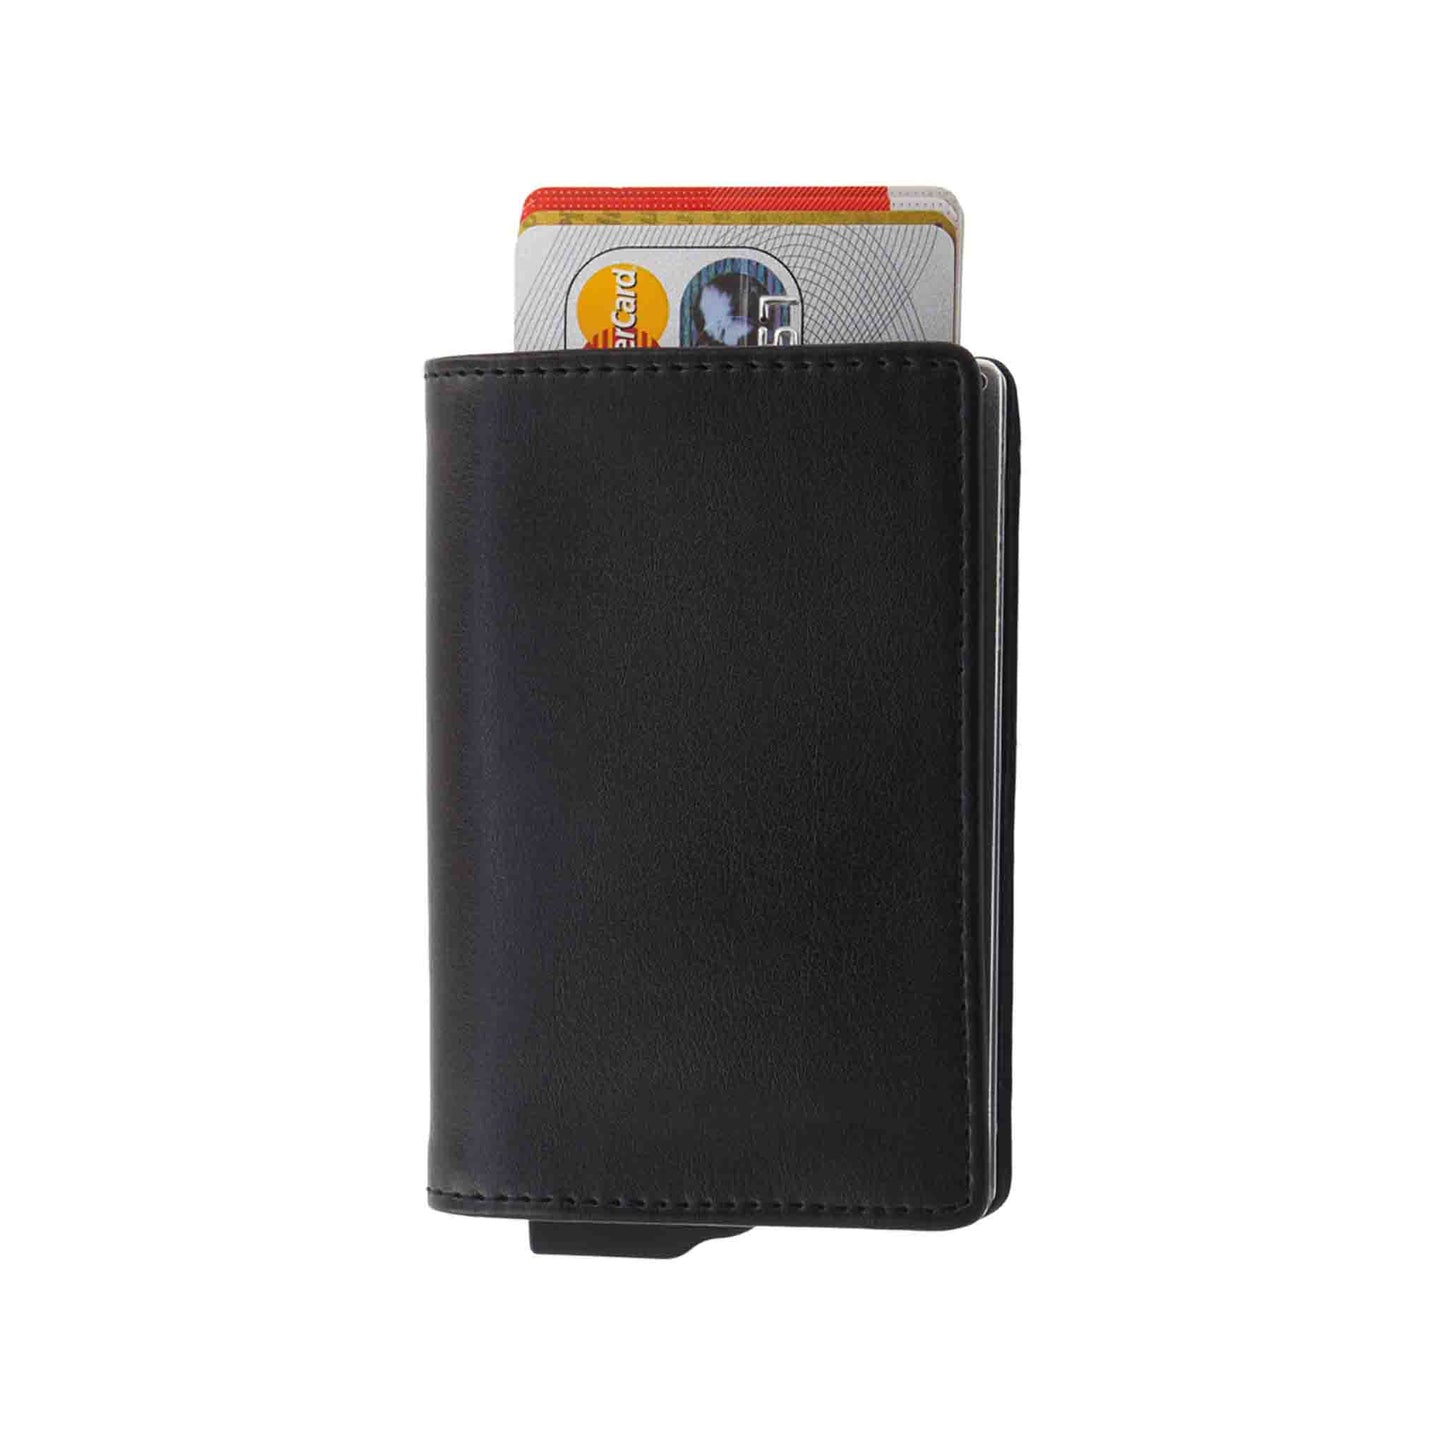 MagCard RFID debit/credit card case